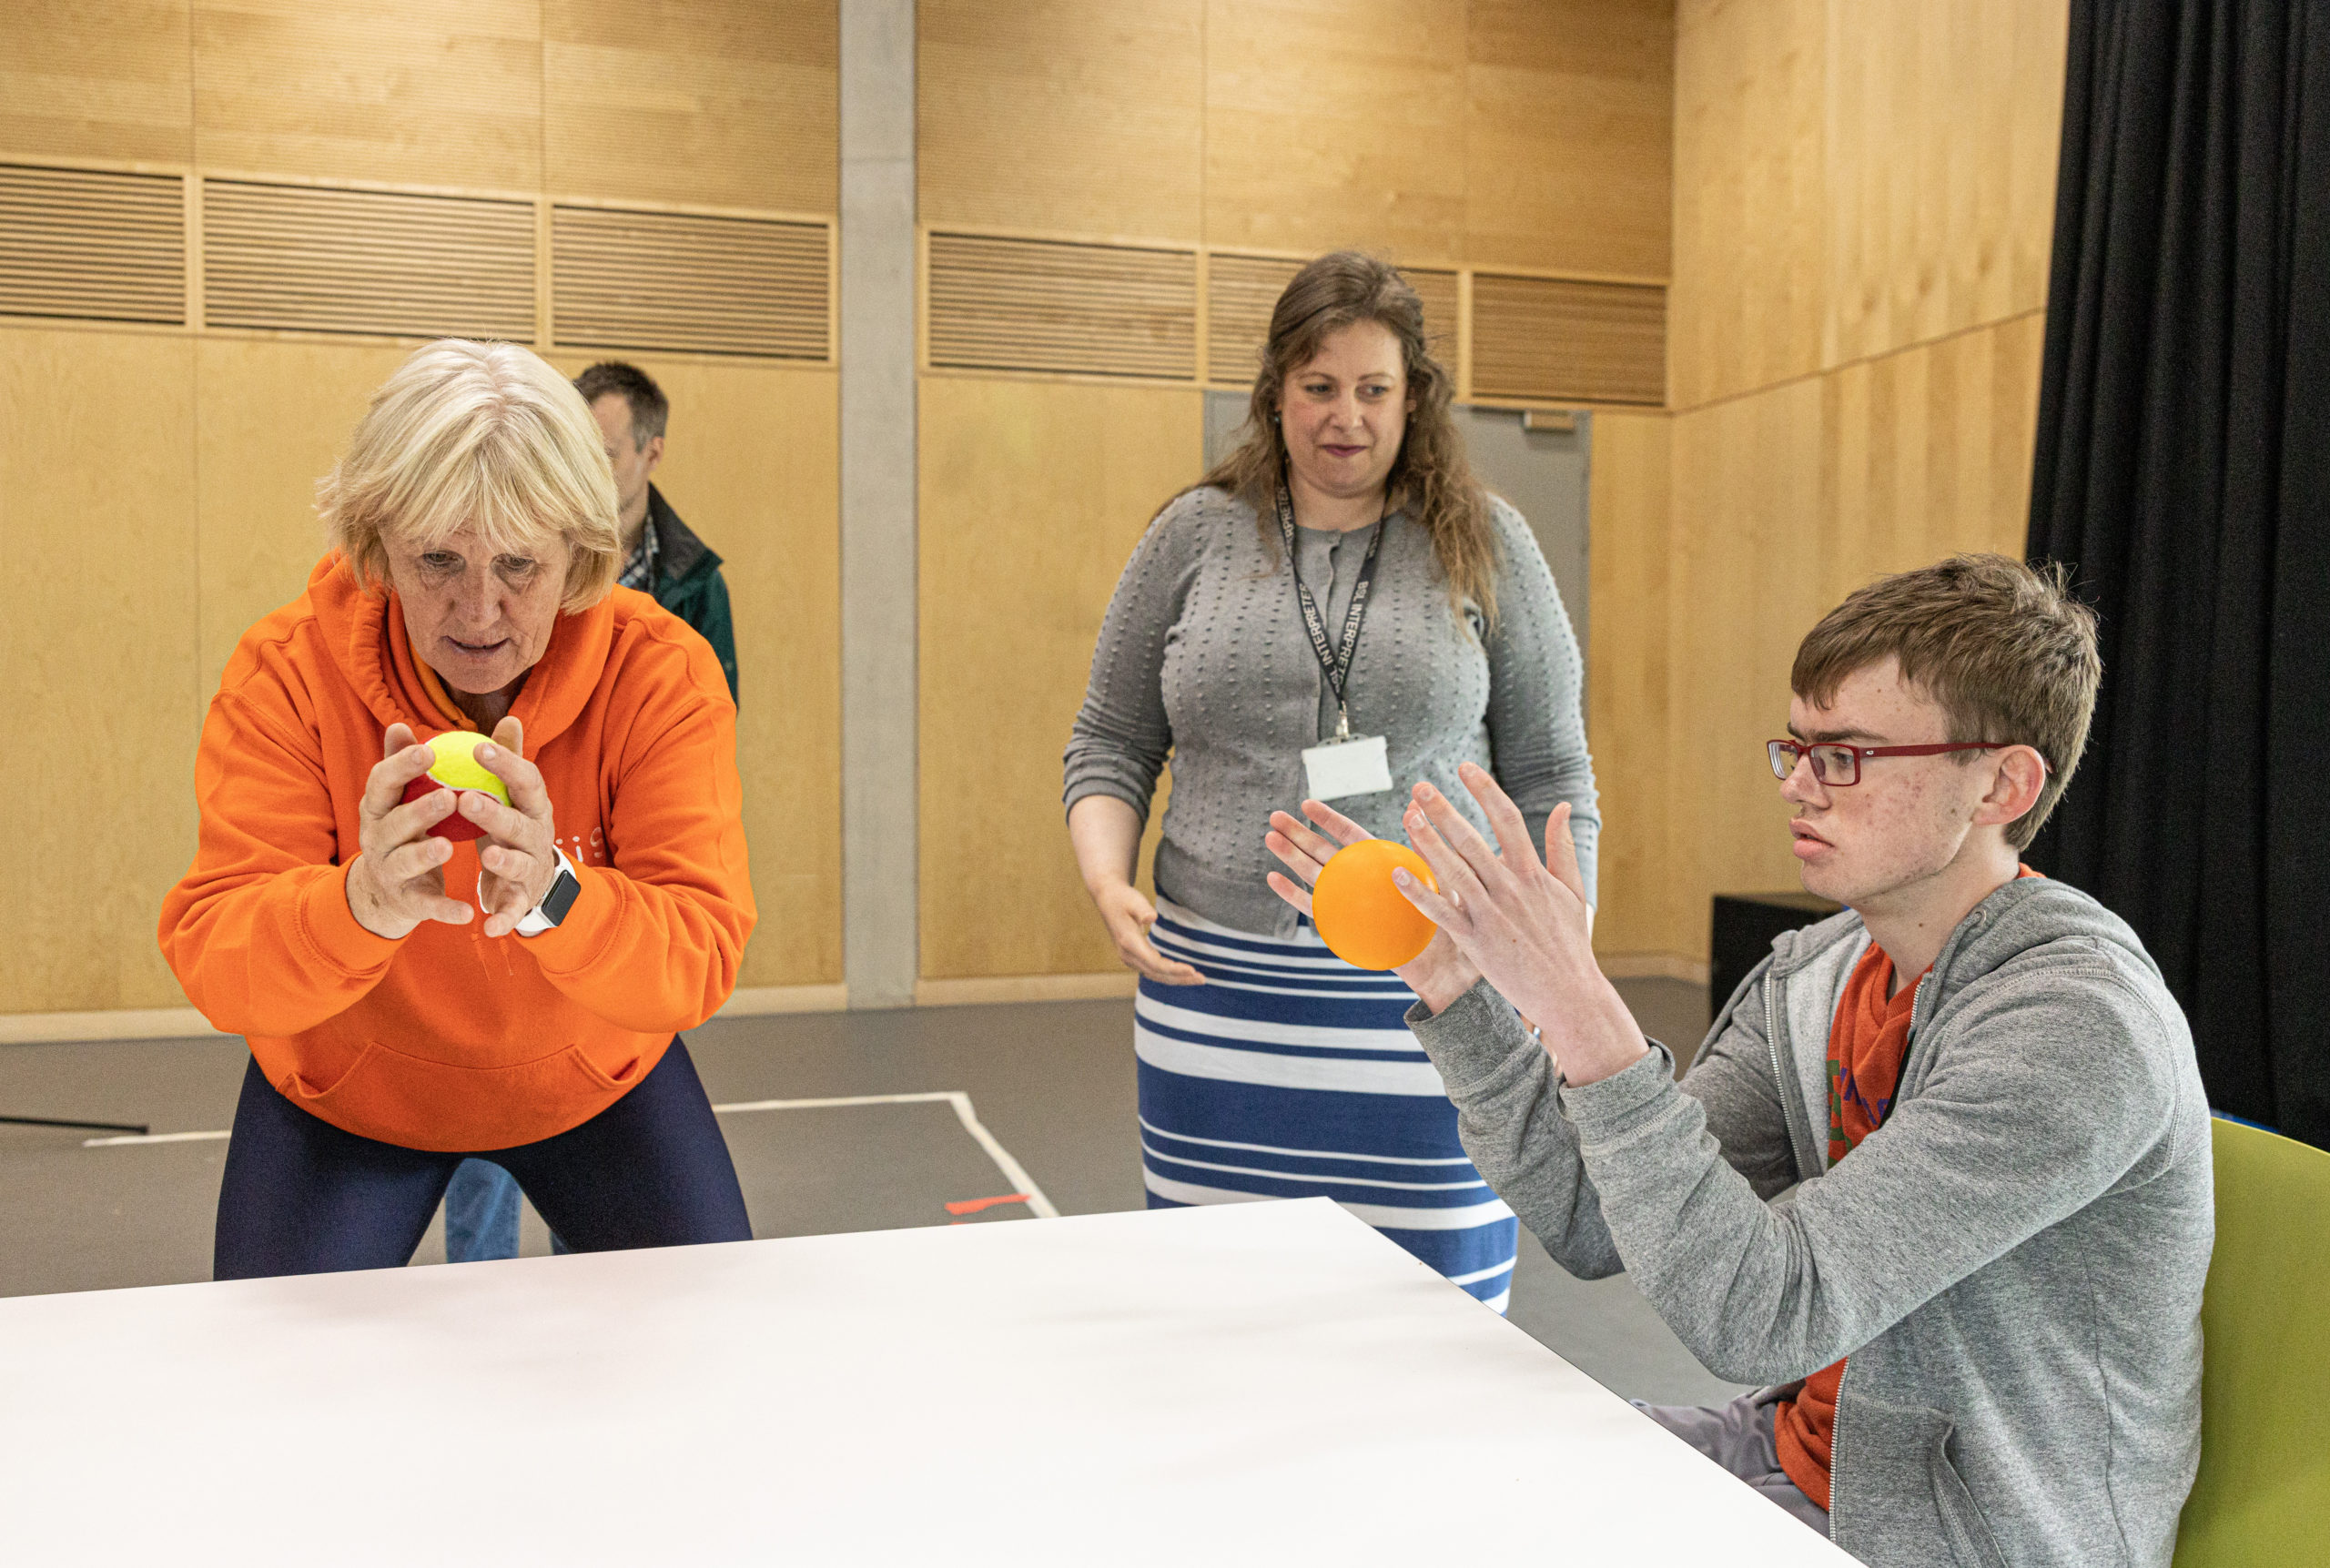 a boy drops an orange ball onto a table next to two women